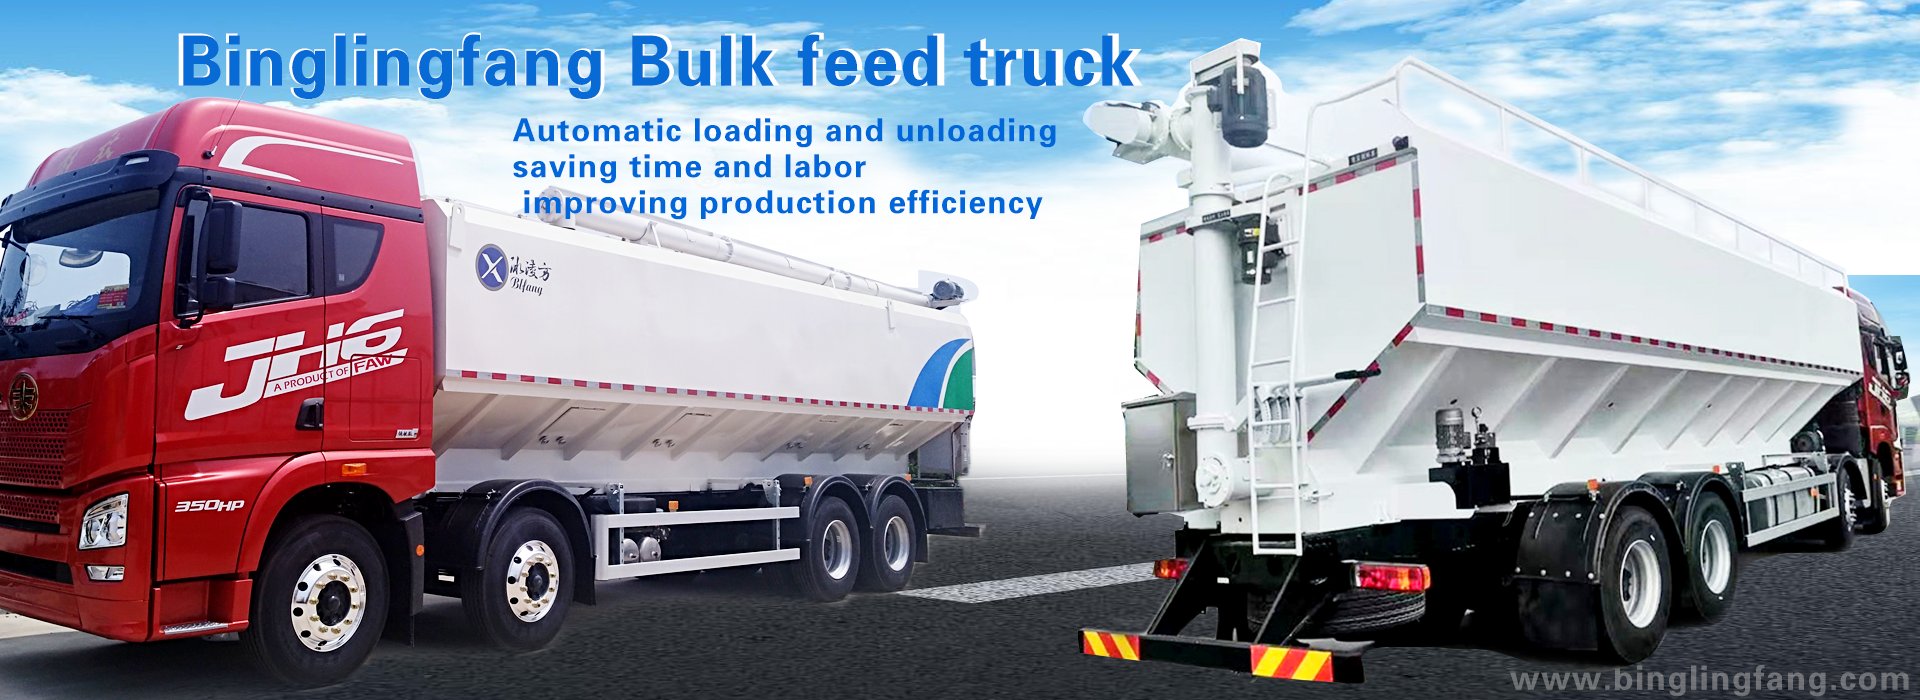 feed truck